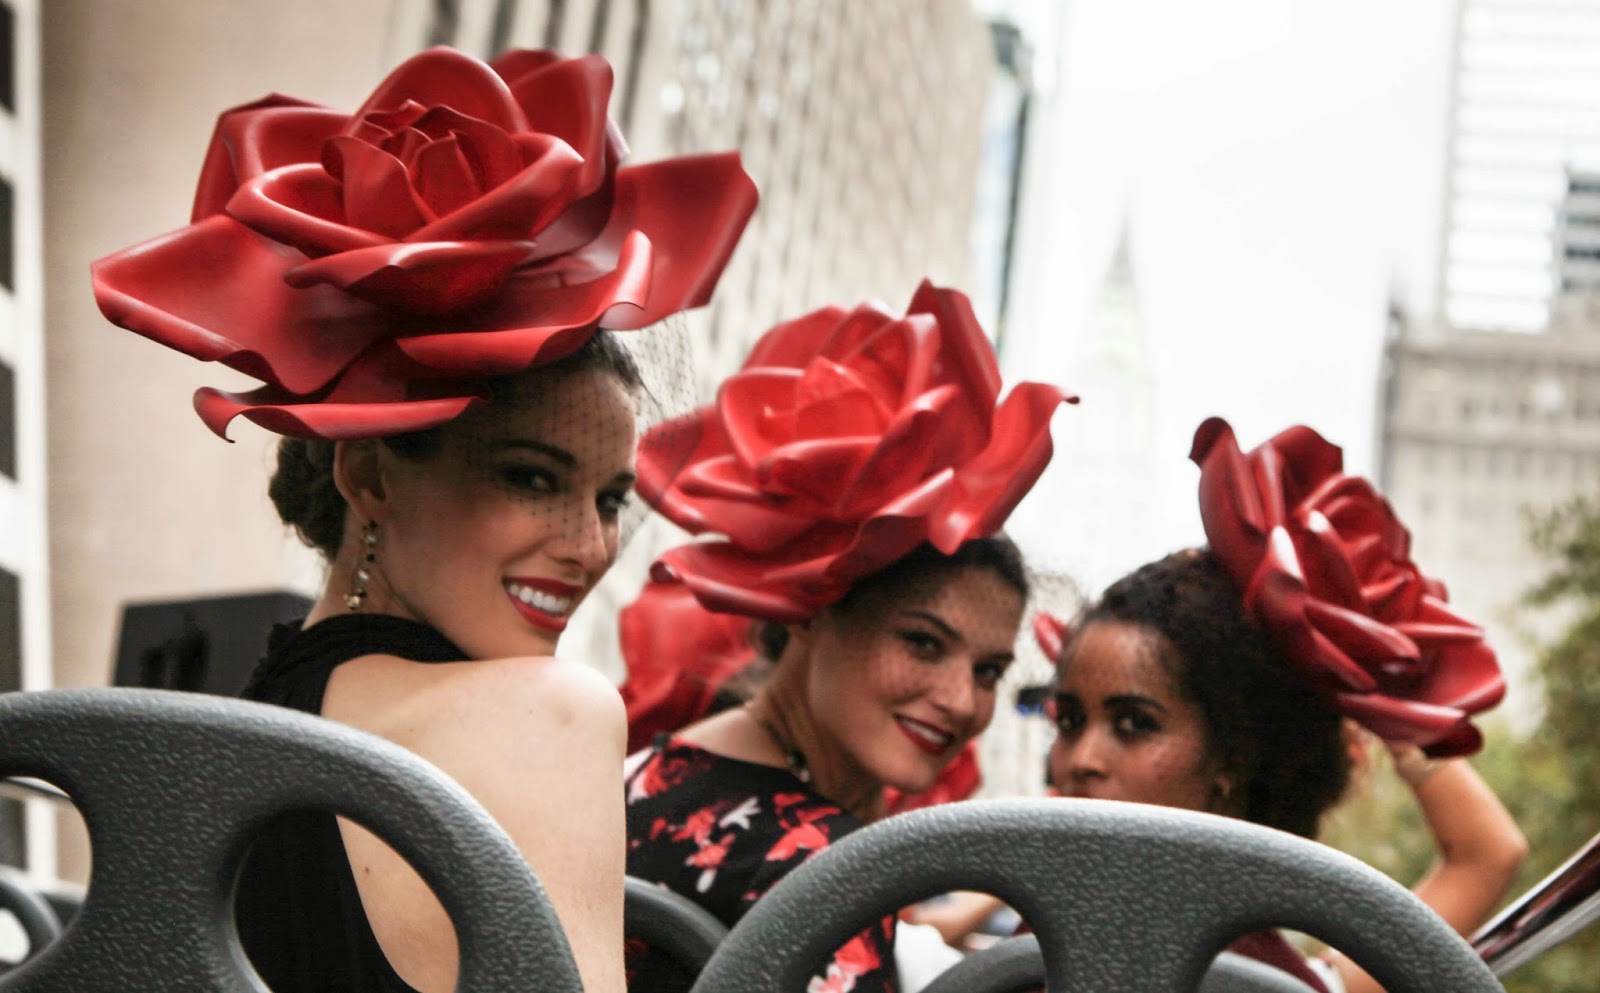 Eva Mendes NYC fashion event Sept 2014